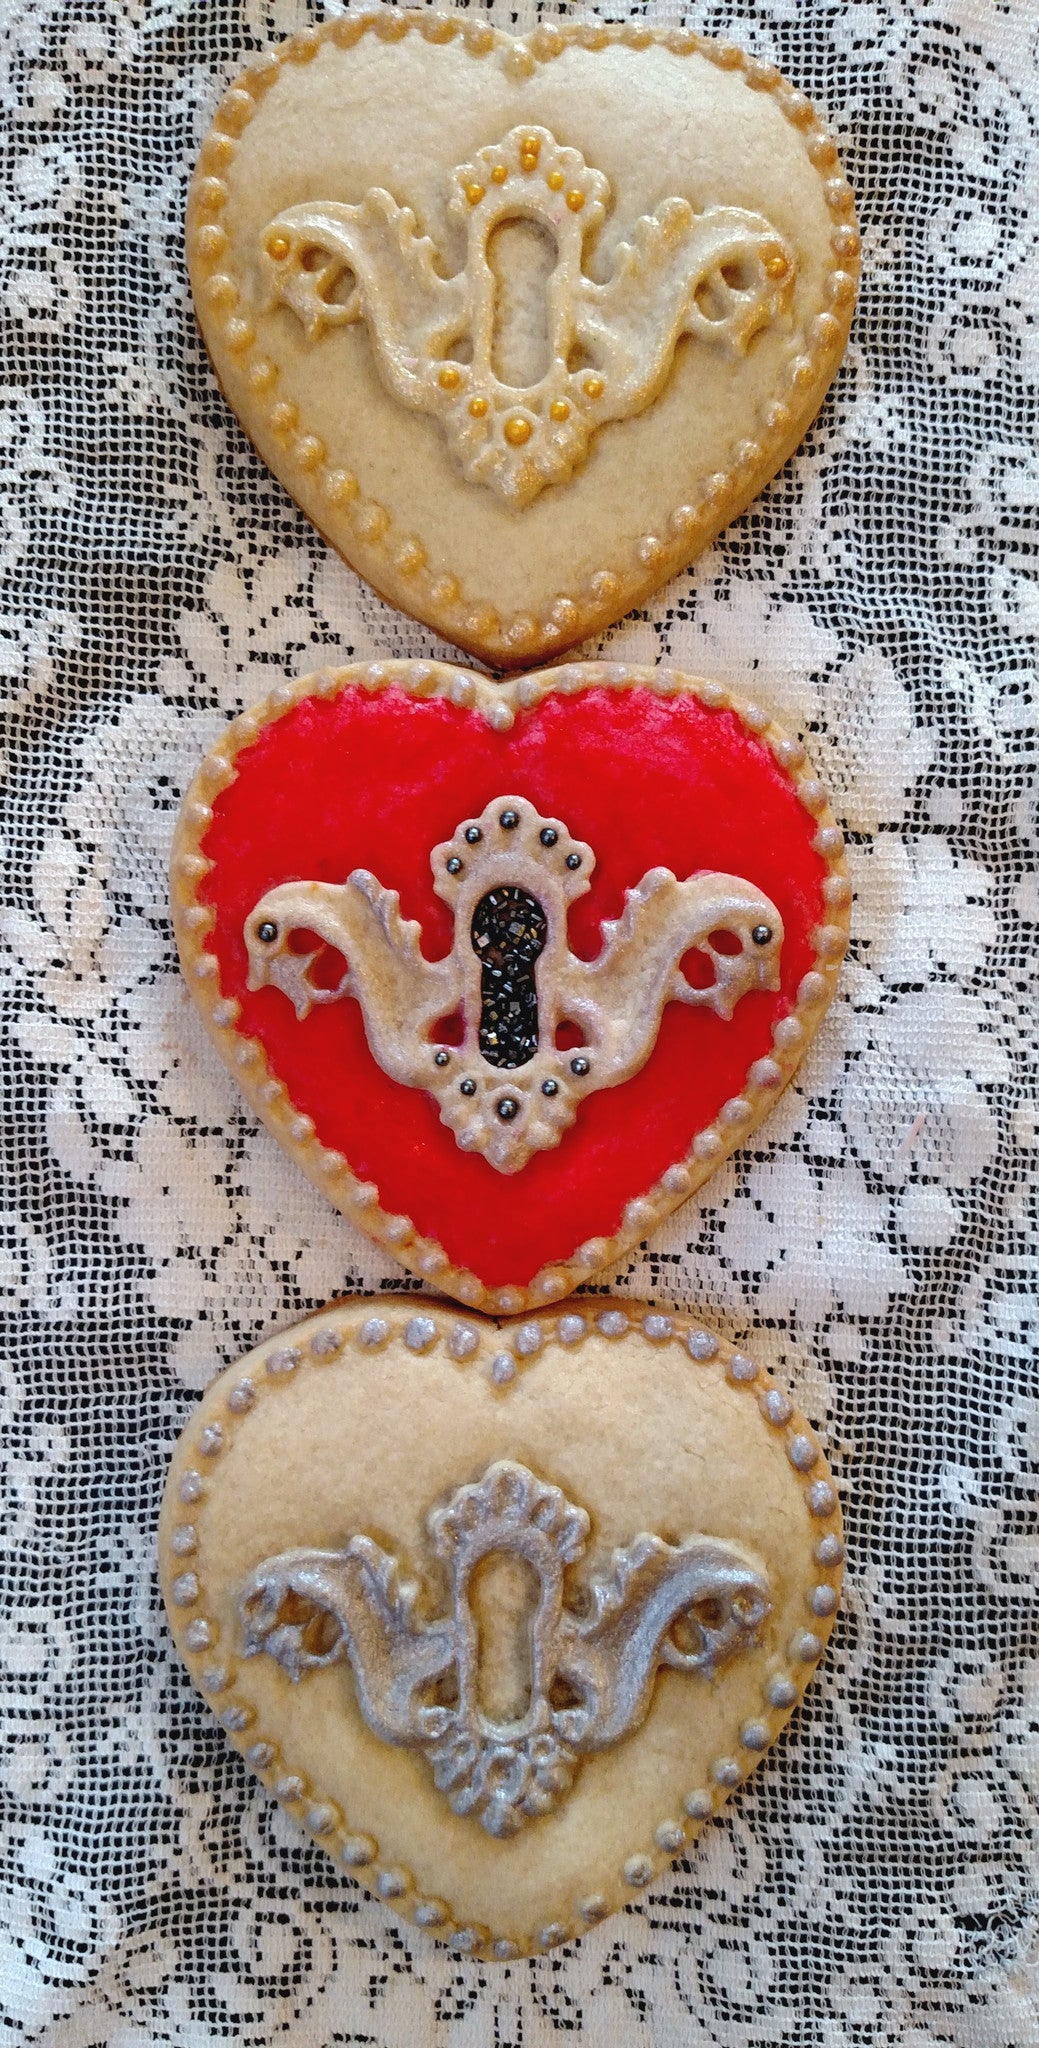 Heart Lock Cookie Mold - Artesão Unique & Custom Cookie Molds